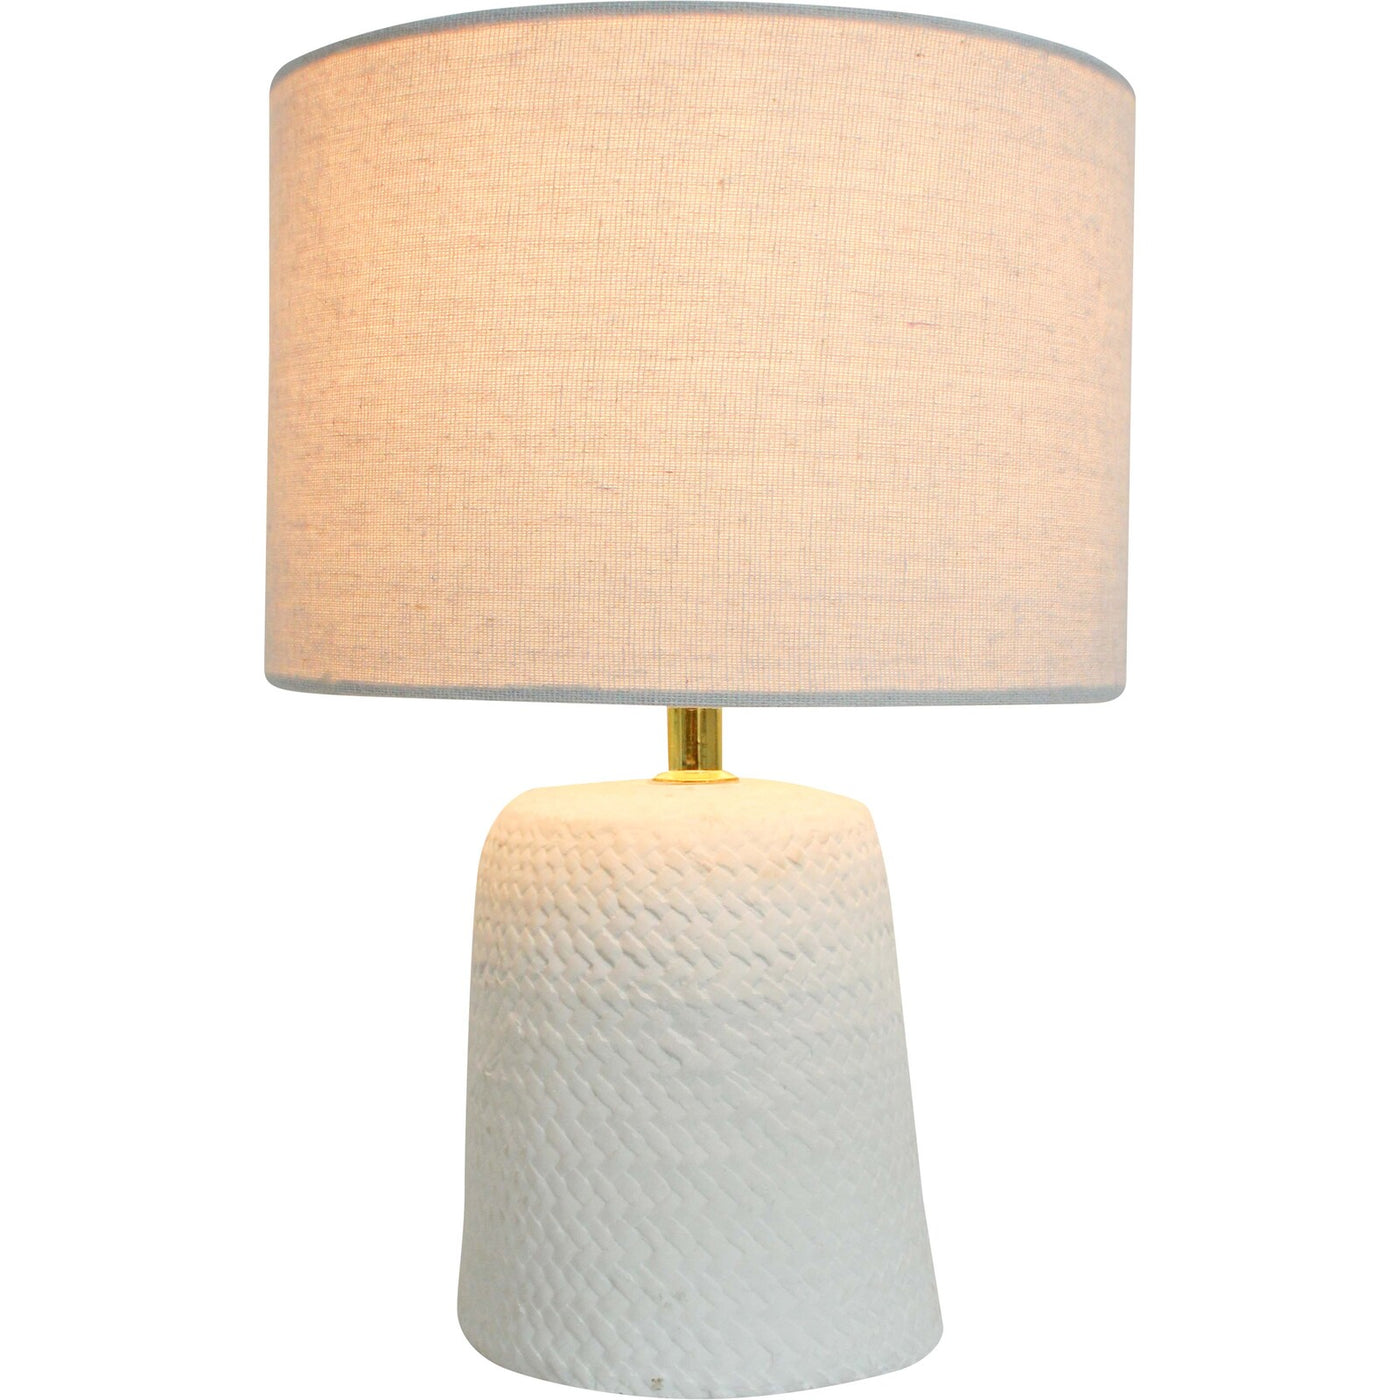 Lamp Plantaion 23x23x35.5cm